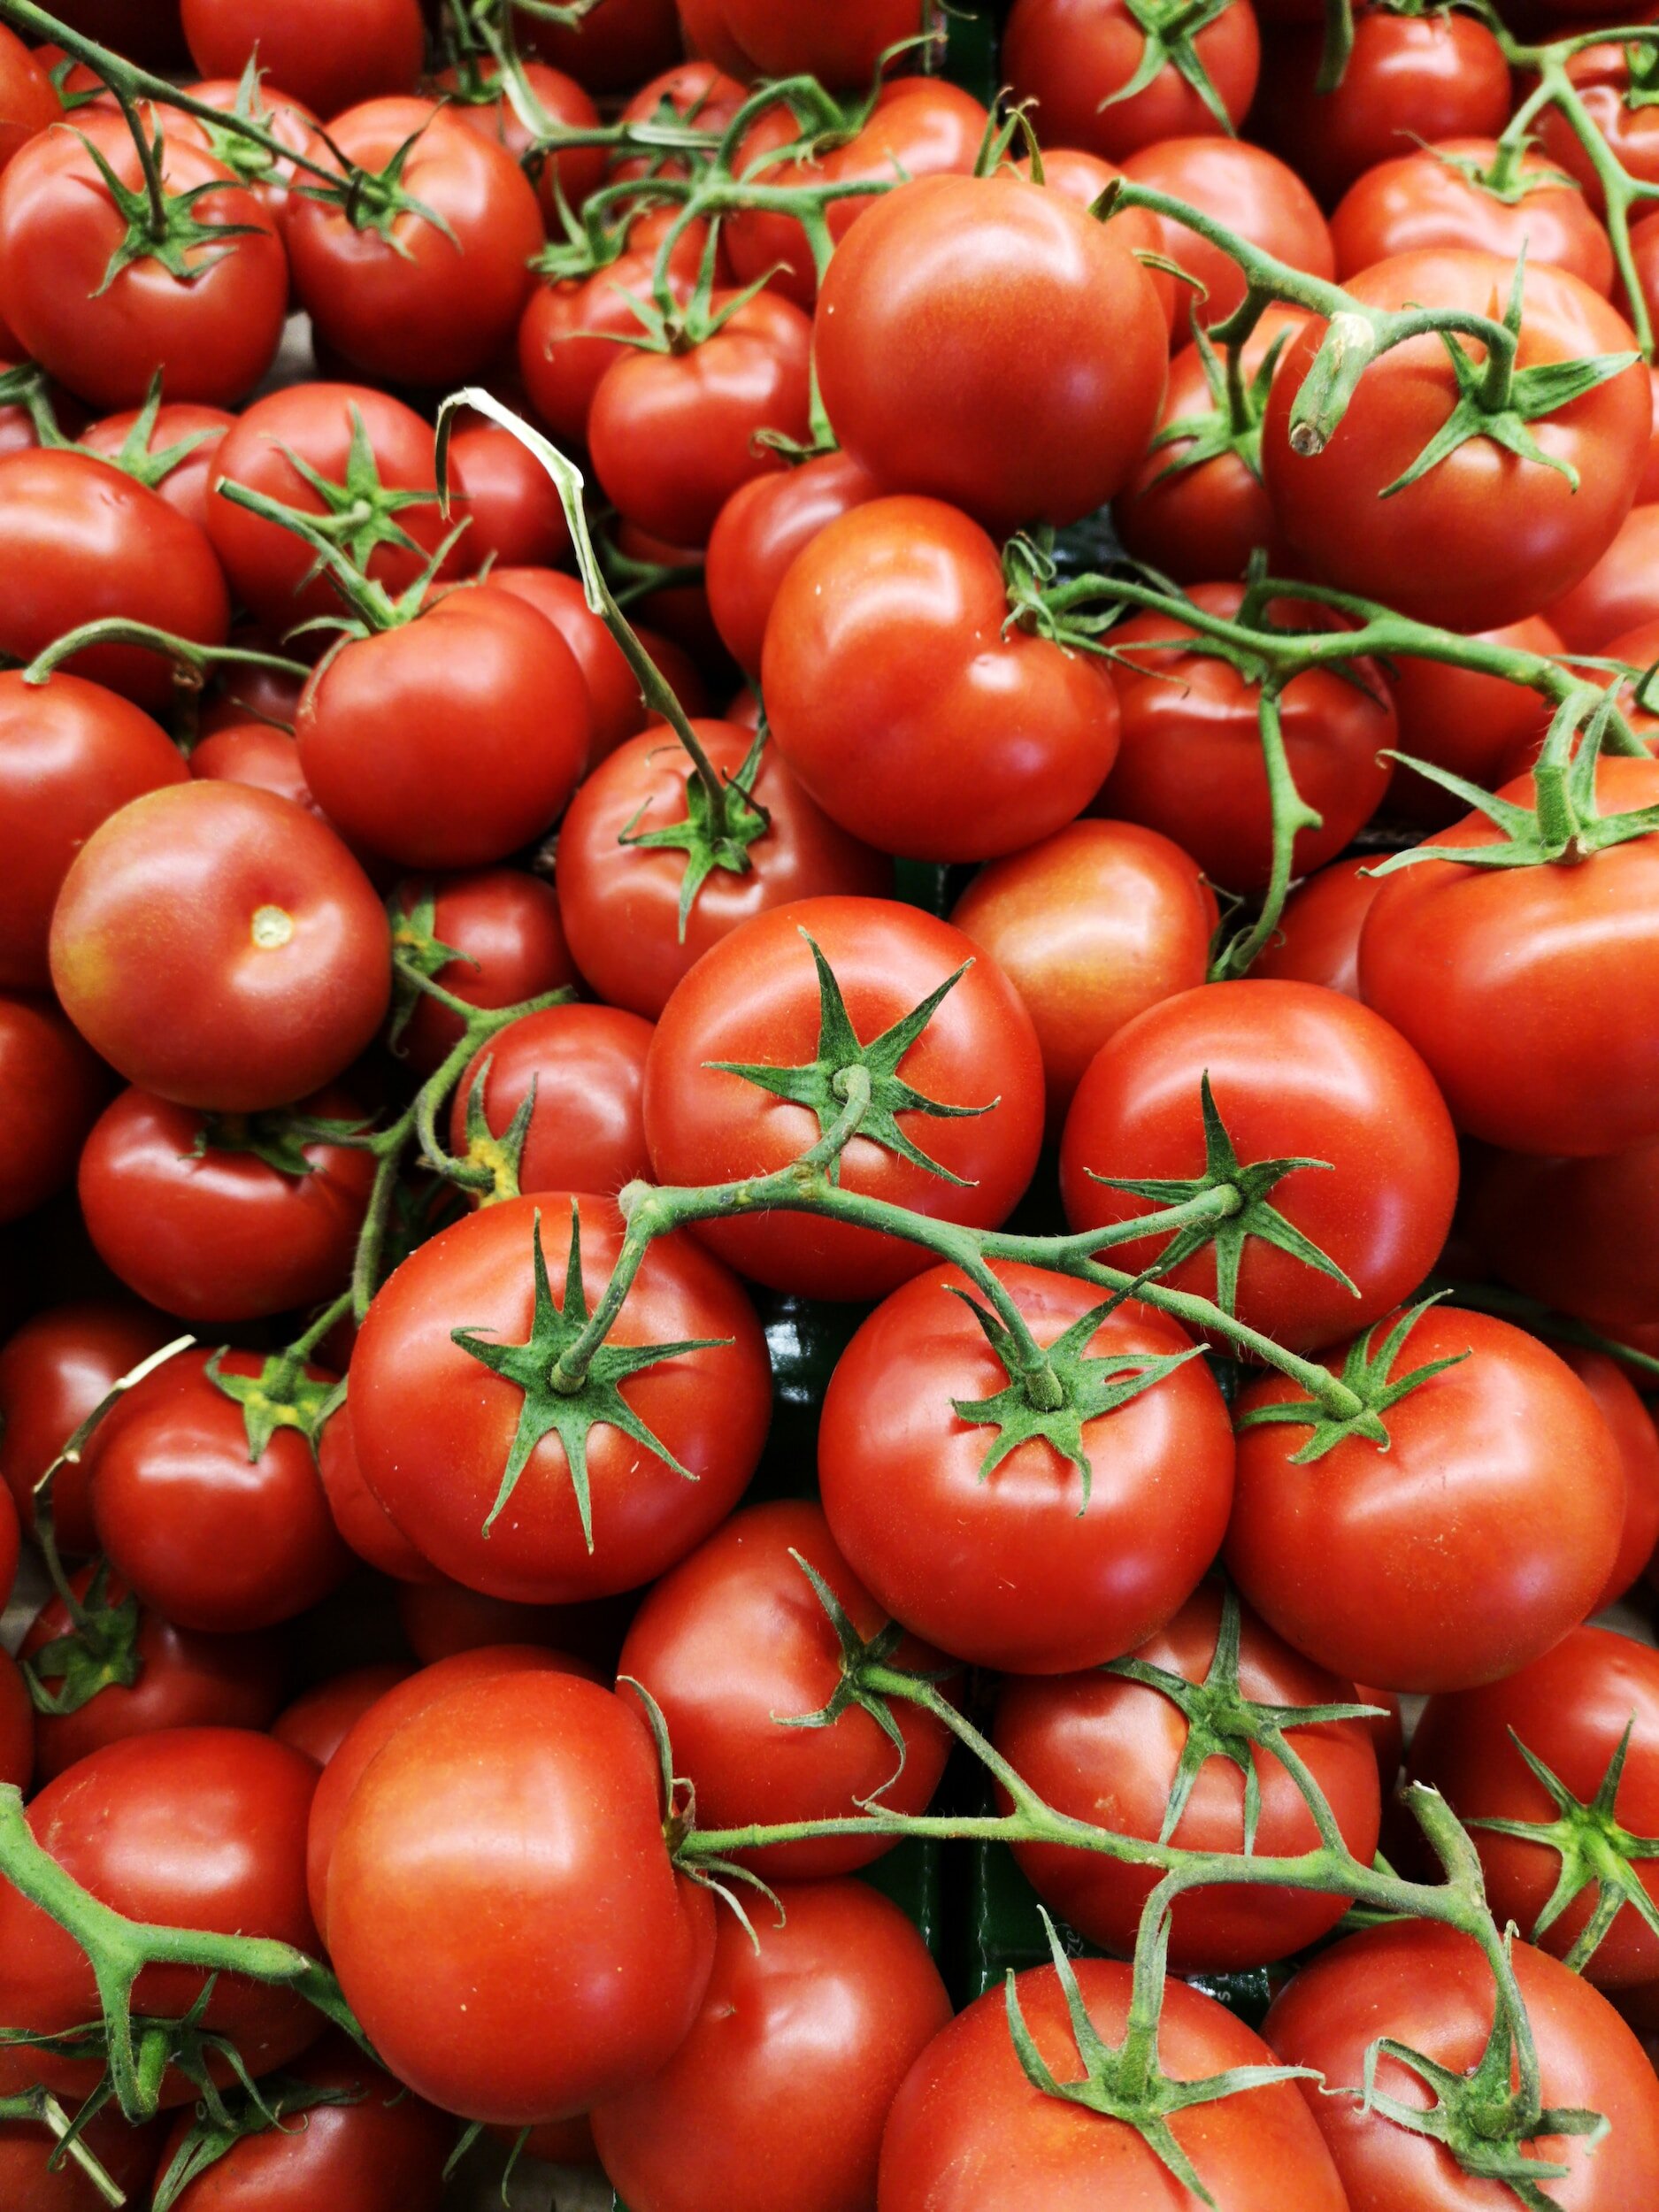 14. Tomatoes